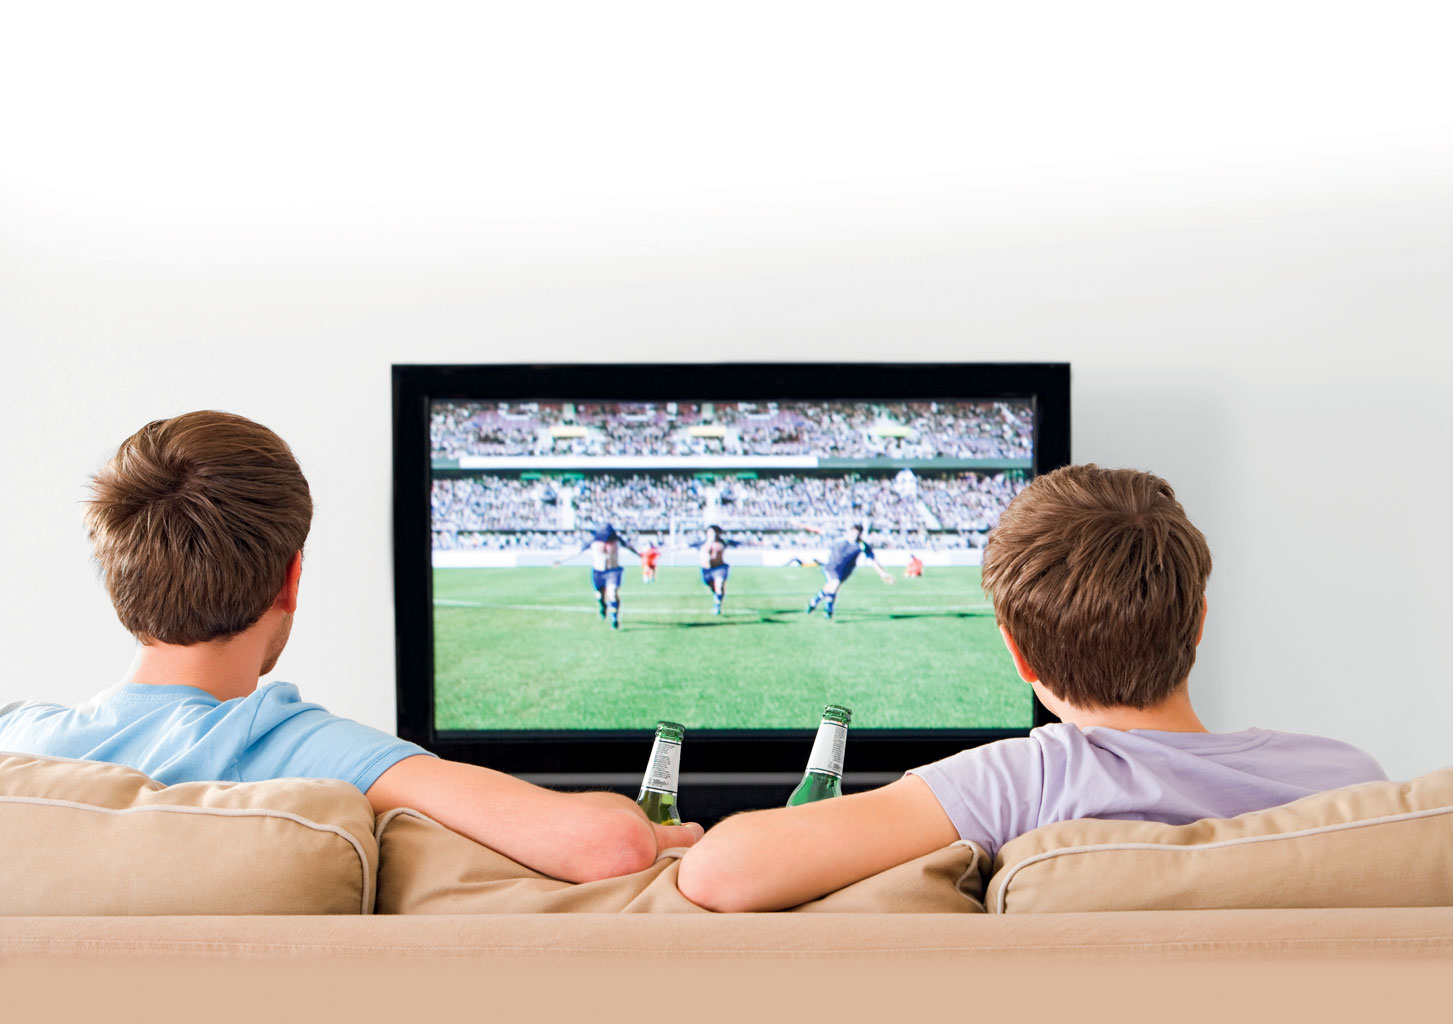 Включи телевизор олега. Футбол по телеку. Спорт по ТВ. Люди смотрят футбол по телевизору. Футбольный матч в телевизоре.